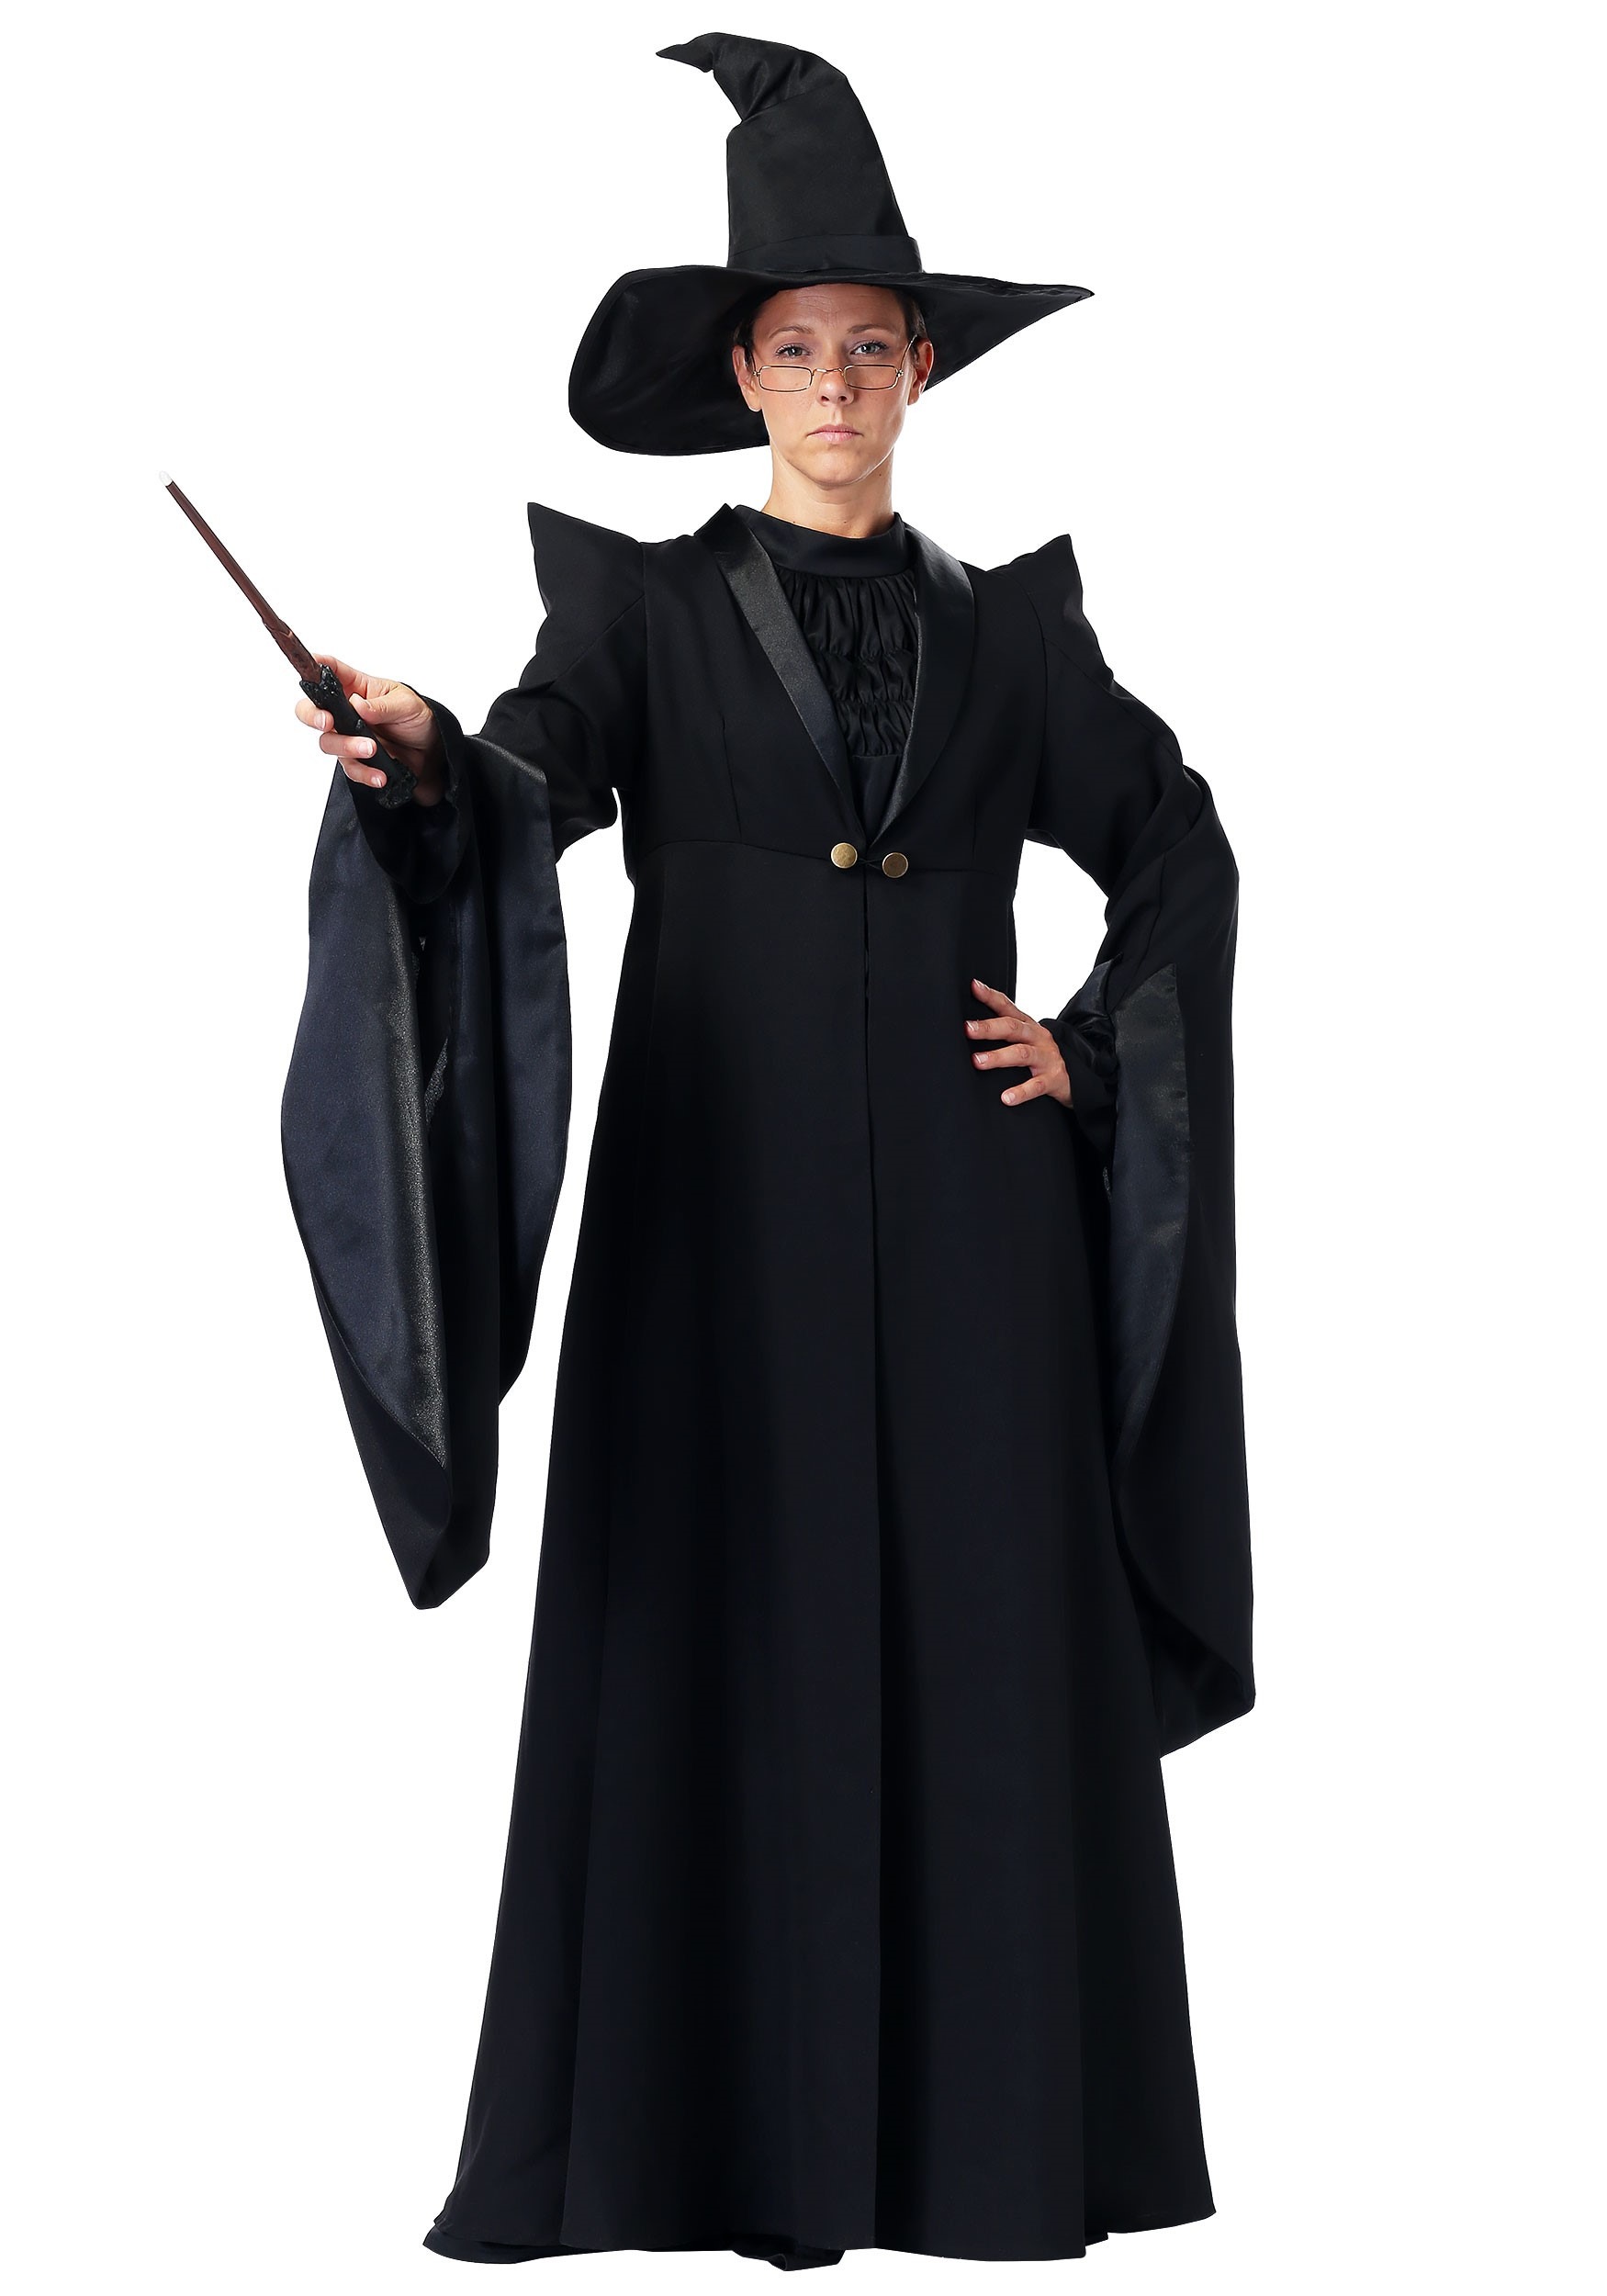 Cosplay Professor Minerva McGonagall Costume Halloween Outfit